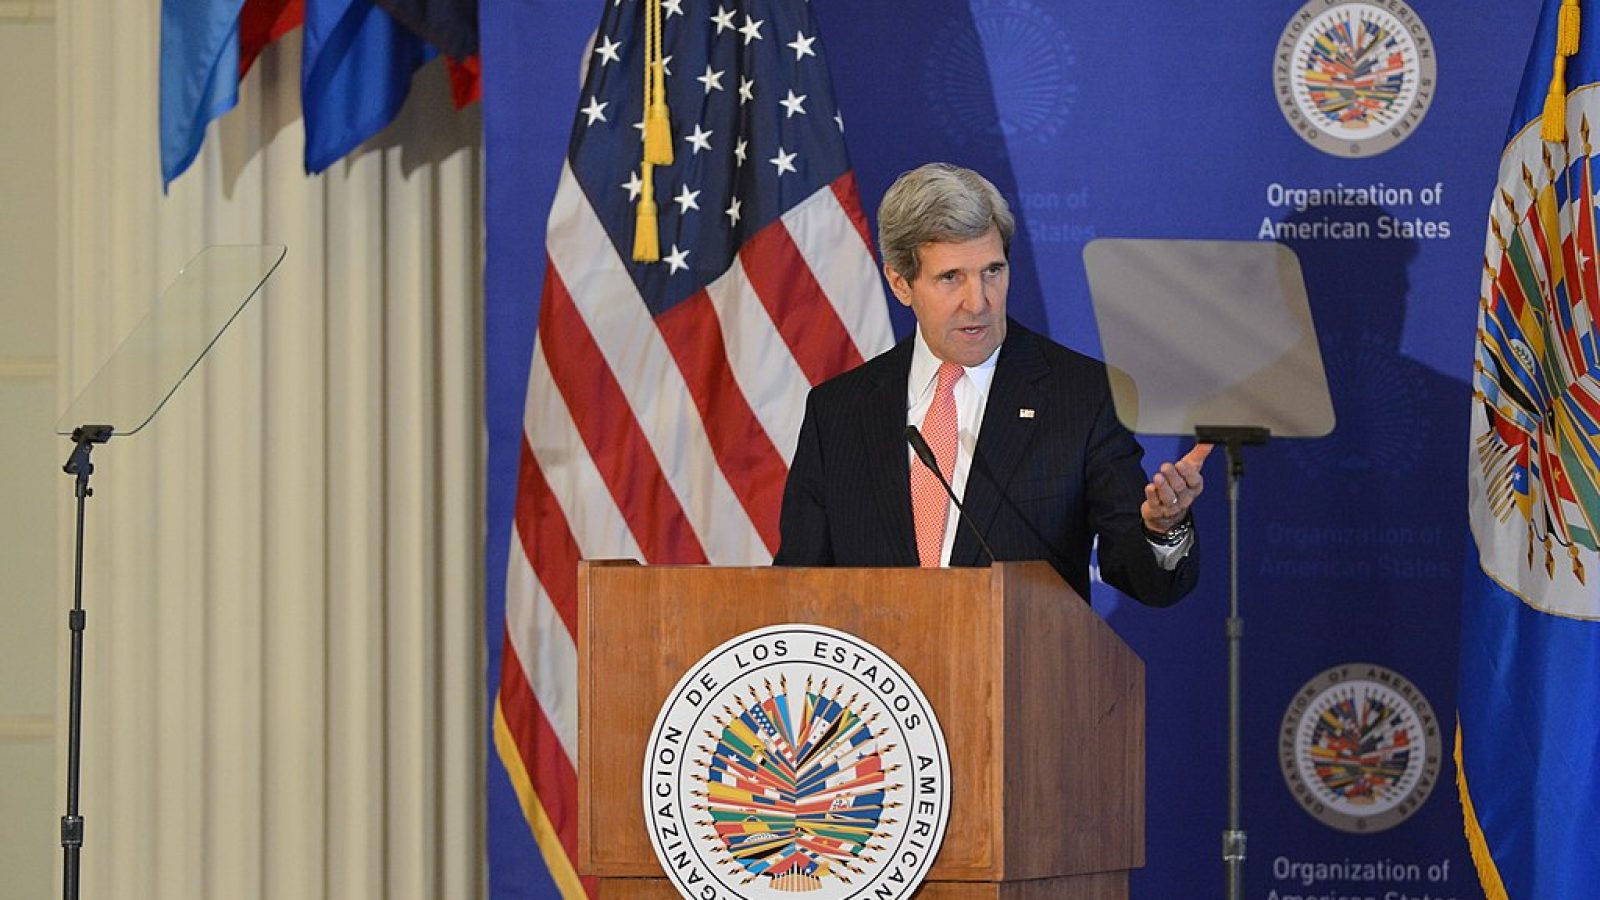 John Kerry speaking at at the Organization of American States.